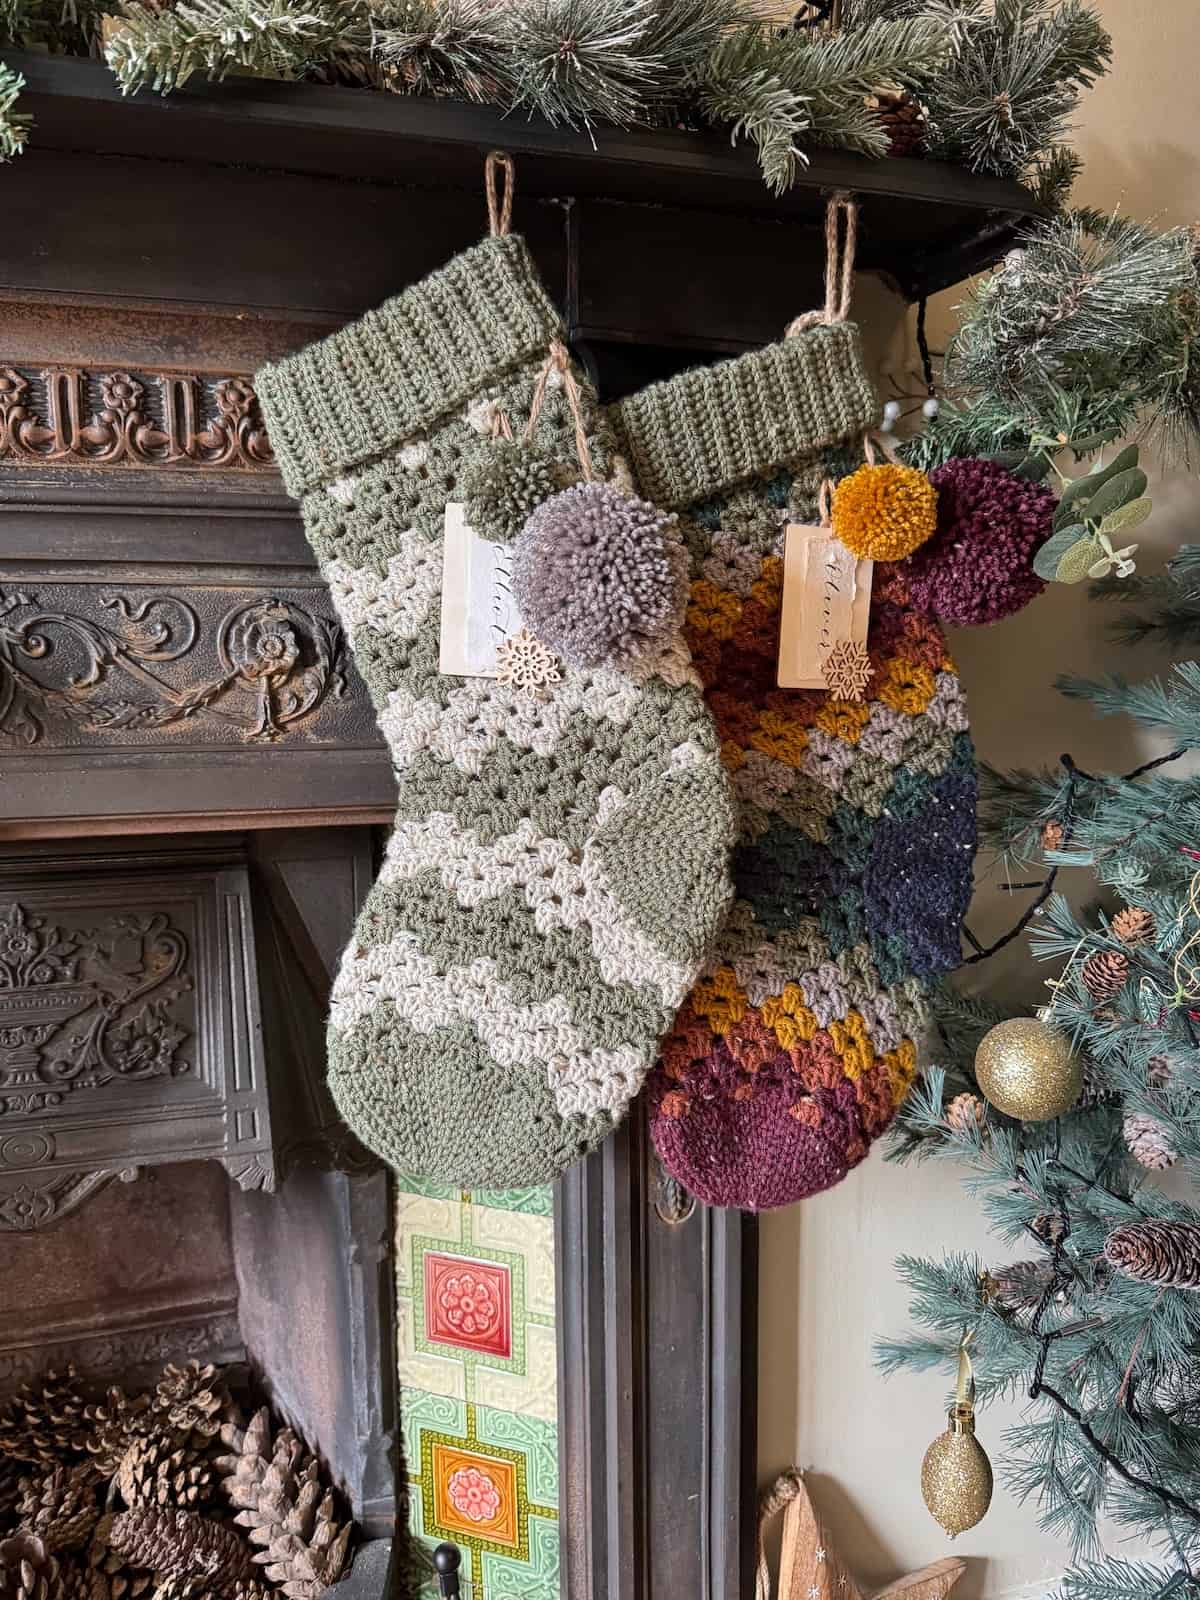 Easy Crochet Stocking Pattern using the Granny Stitch